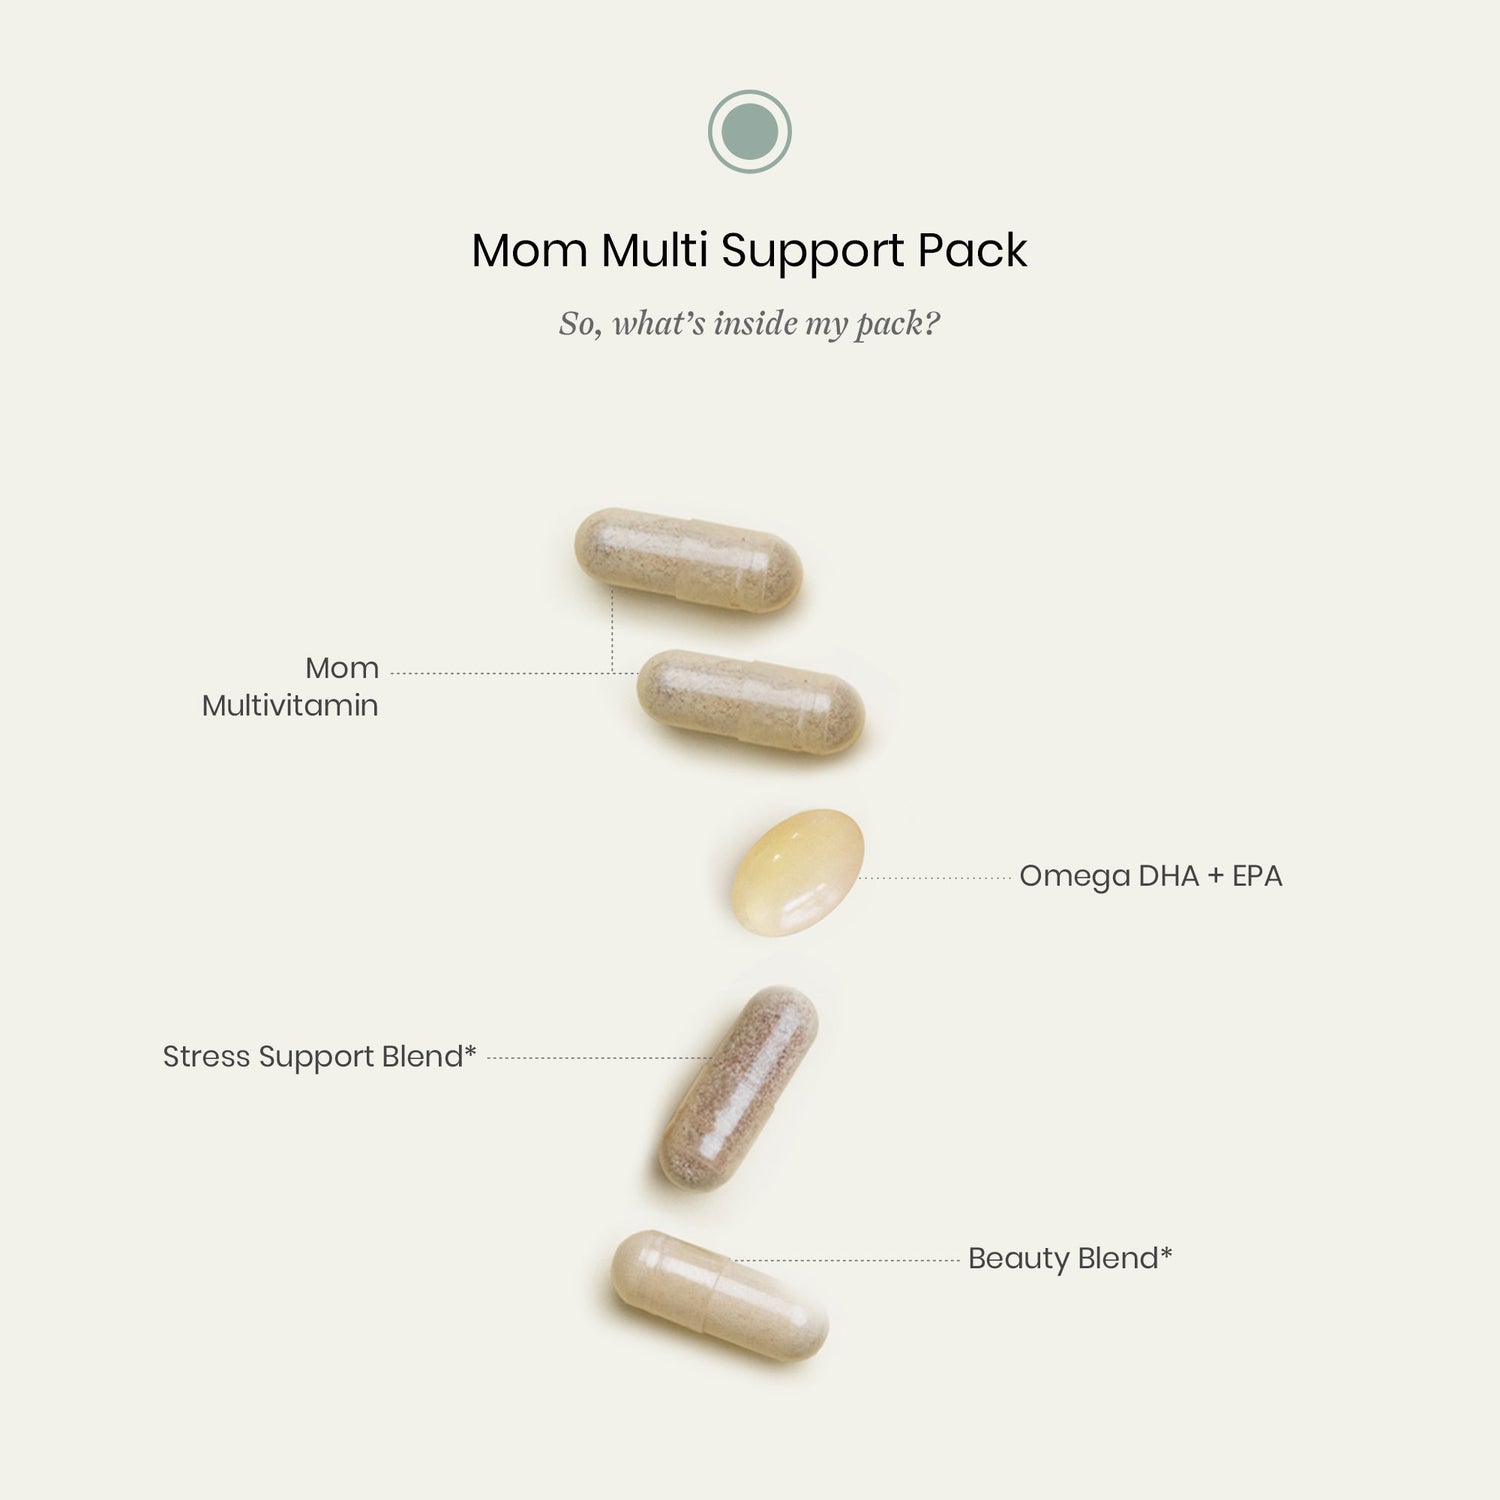 Mom Multi Support Pack vitamin pills